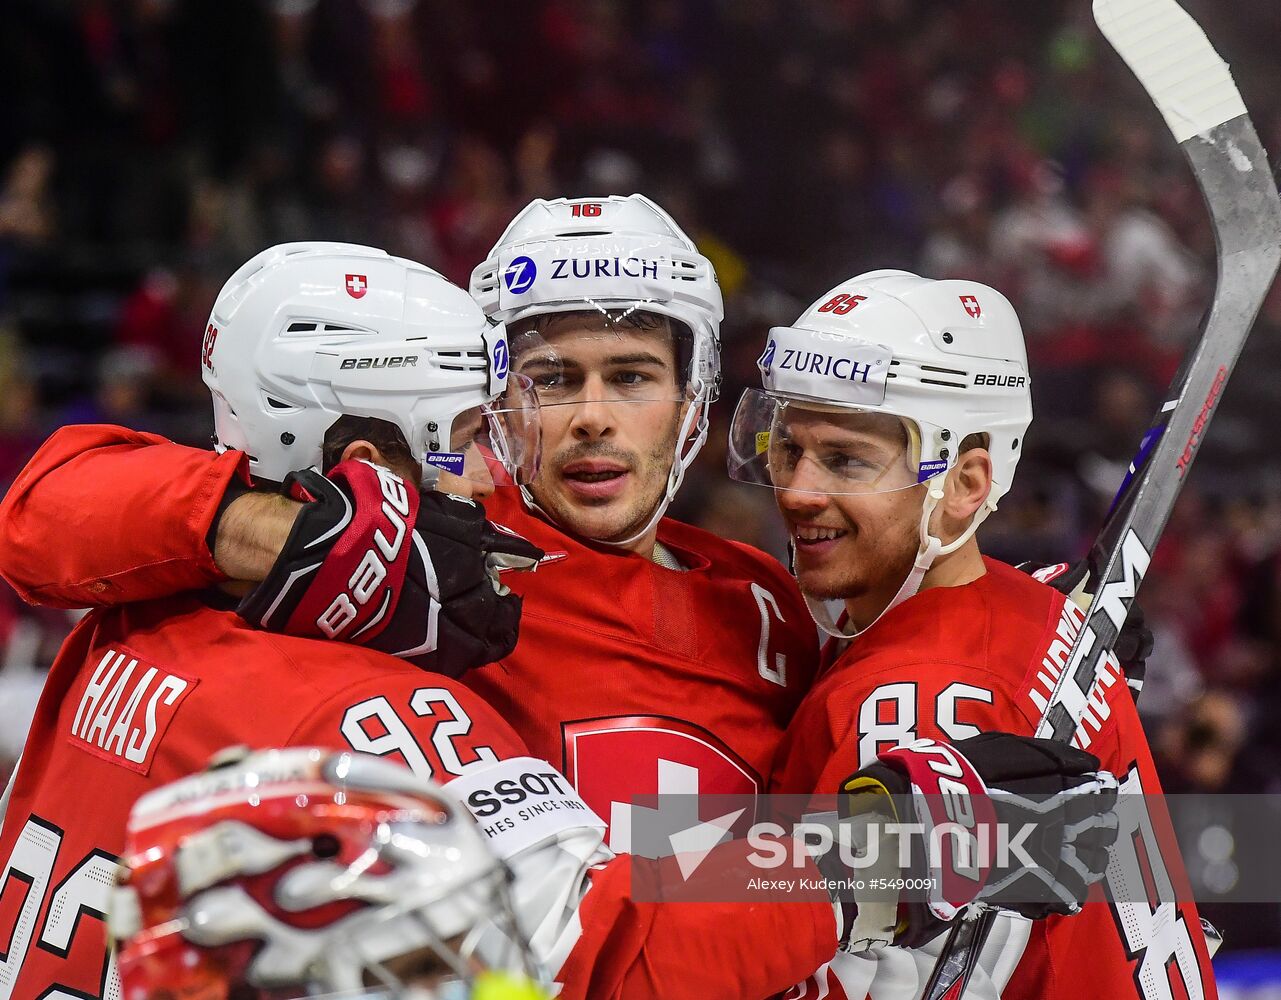 Ice Hockey World Championship. Switzerland vs. Austria